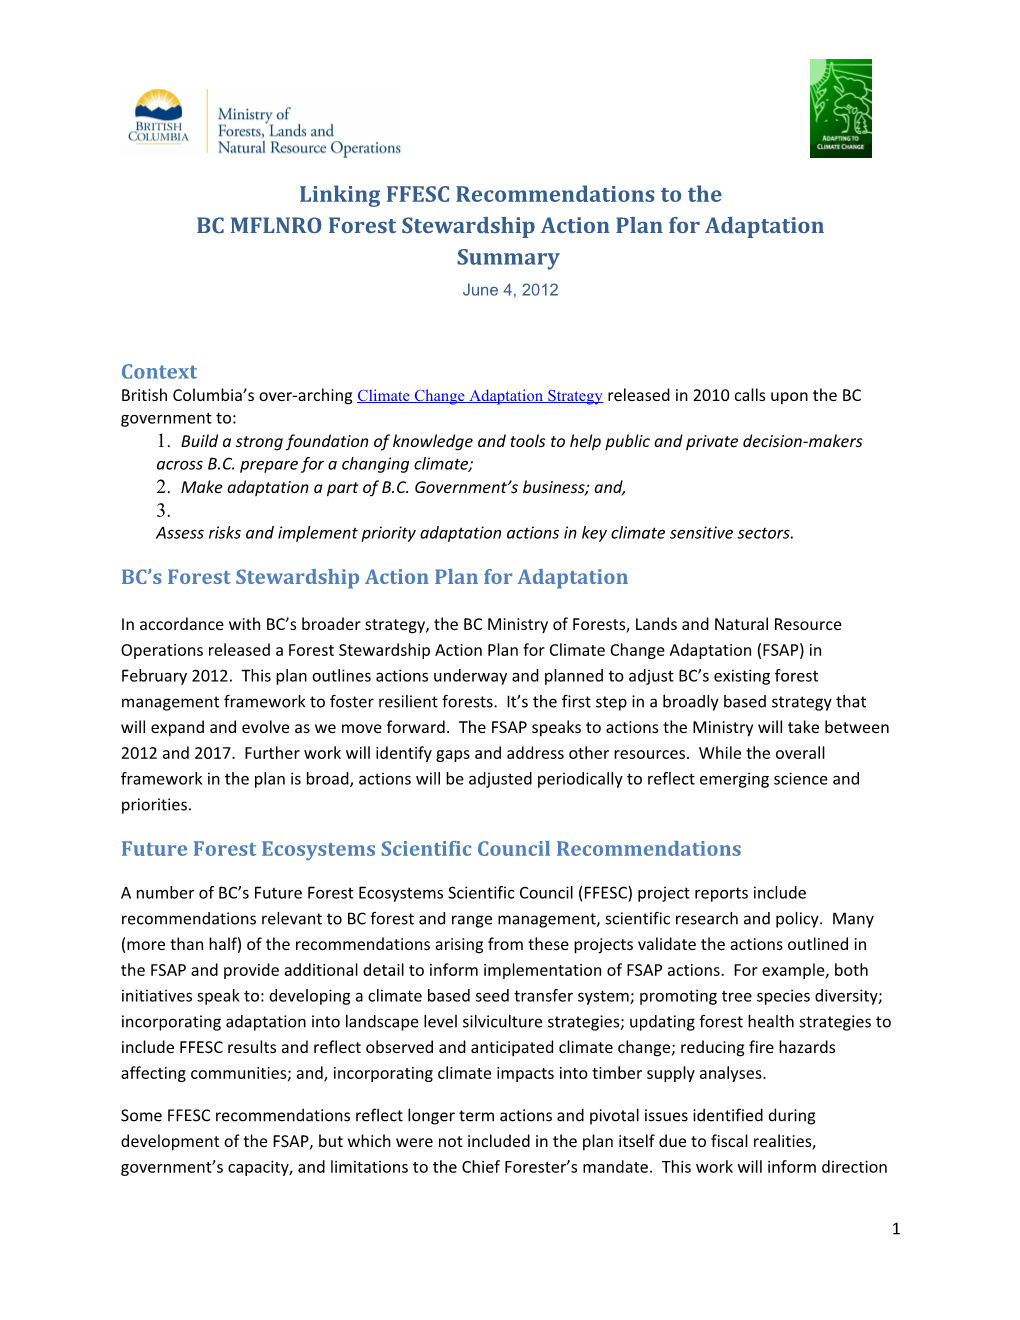 BC MFLNRO Forest Stewardship Action Plan for Adaptation